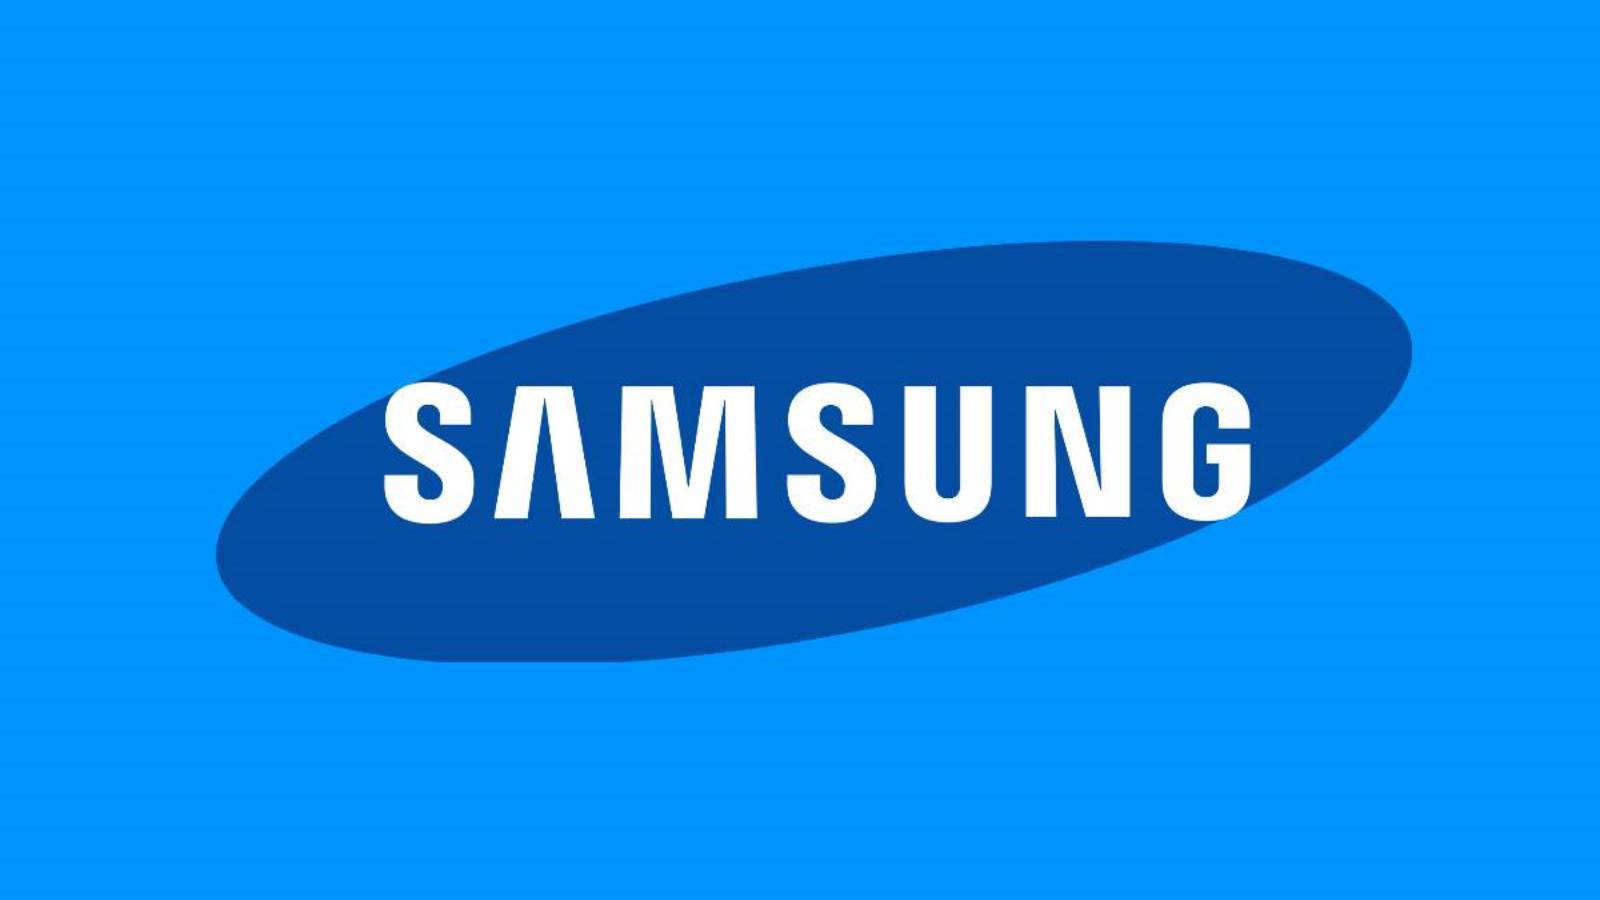 Samsung lanseaza CES 2021 chip Exynos 2100 GALAXY S21